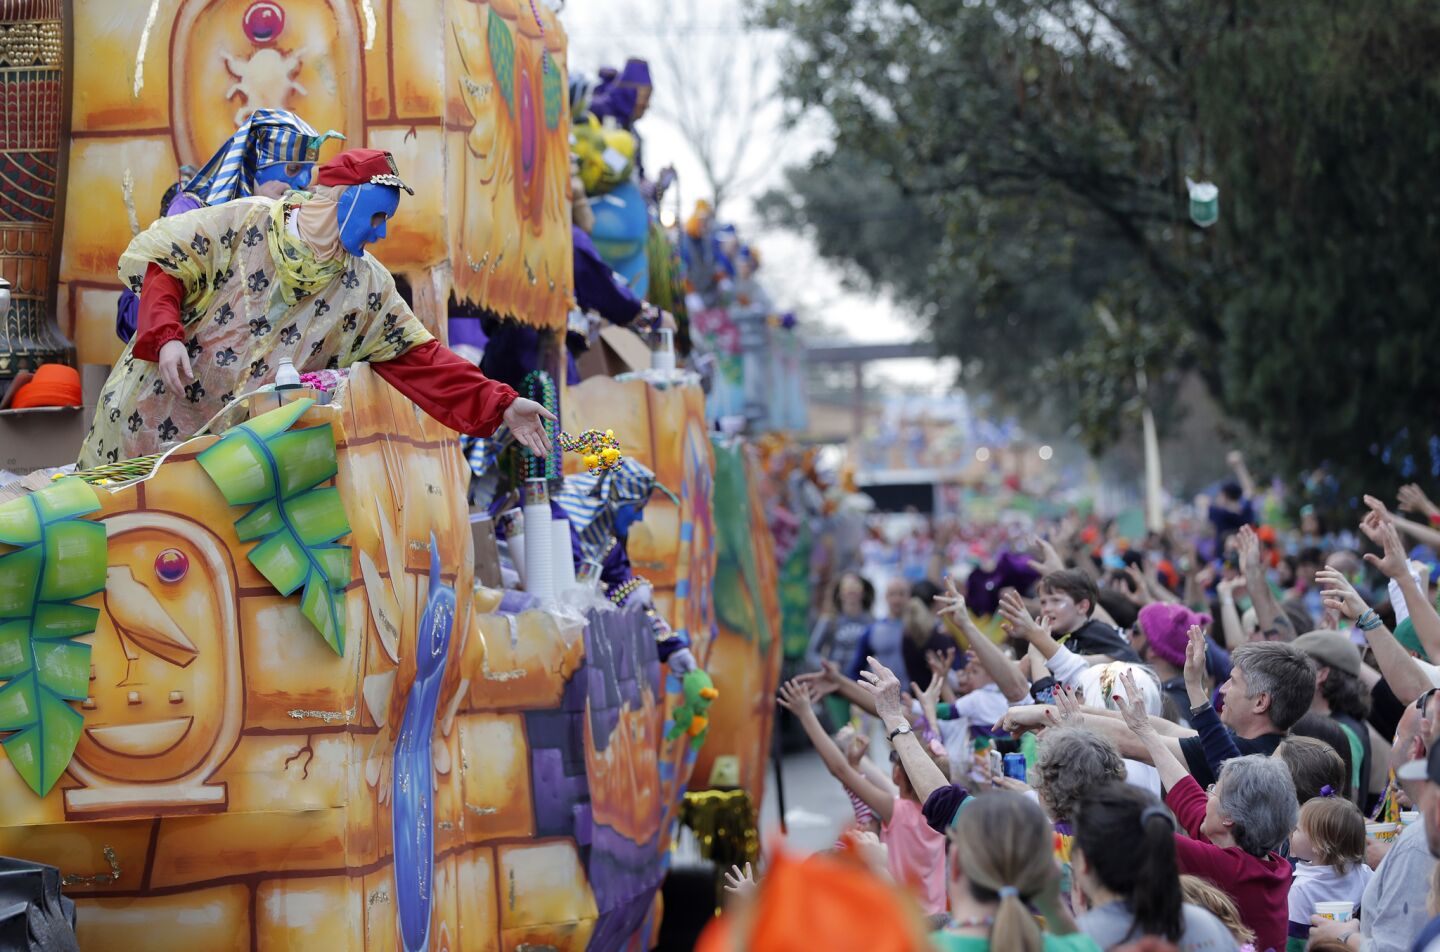 Mardi Gras in New Orleans